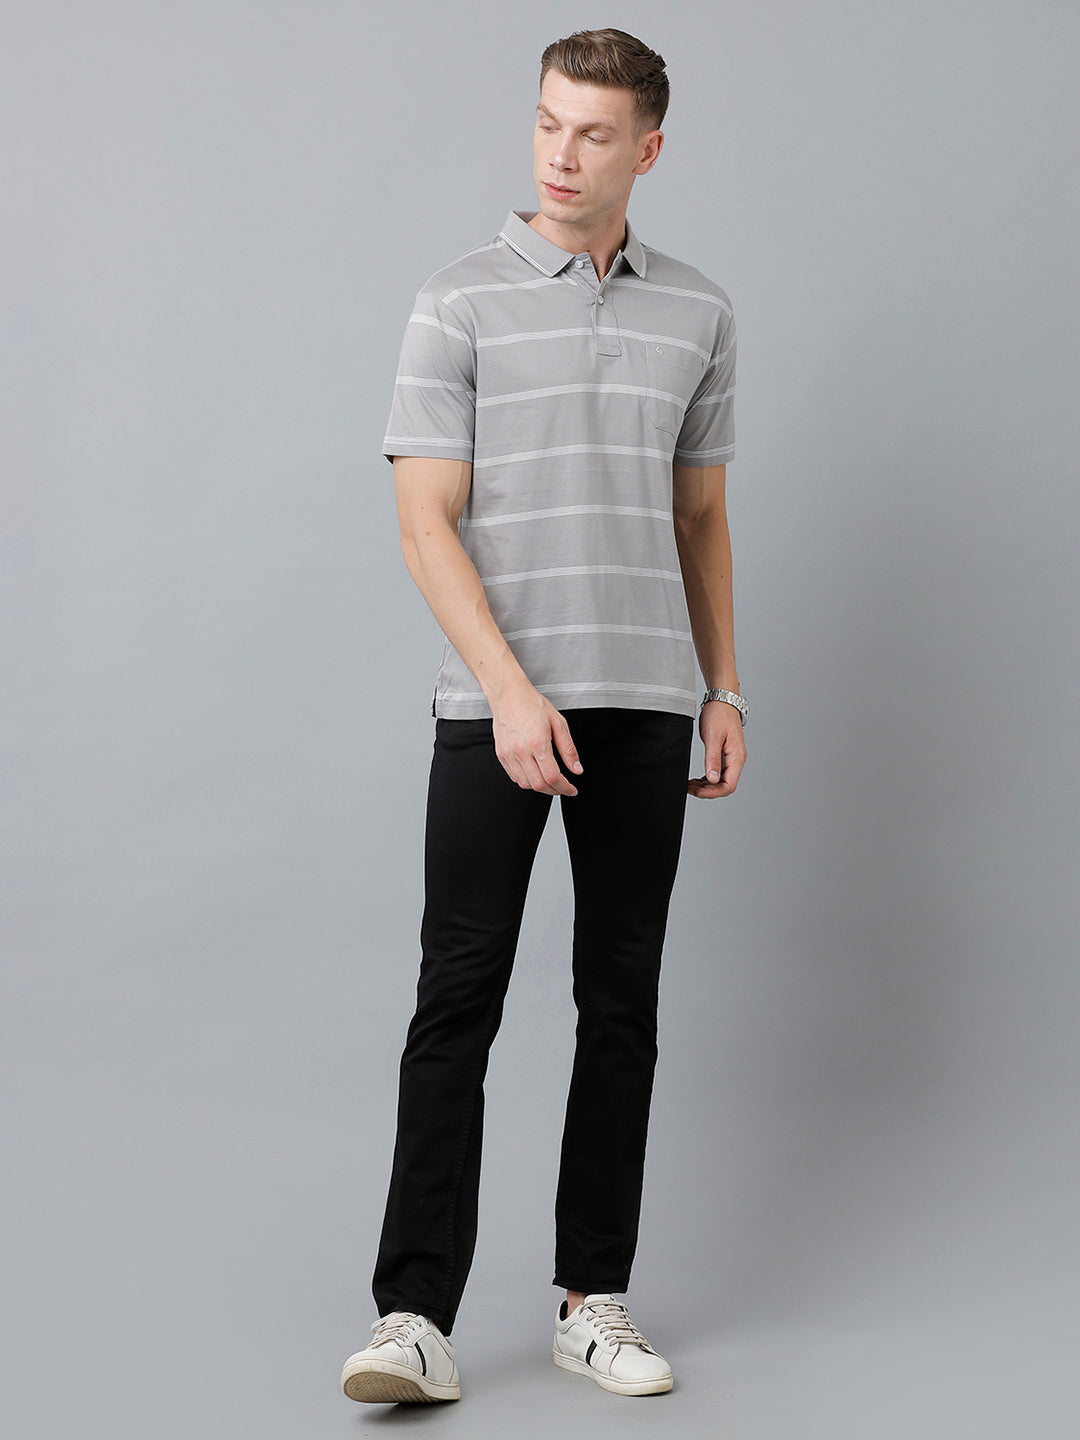 Classic Polo Men's Cotton Half Sleeve Striped Authentic Fit Polo Neck Grey Color T-Shirt | Ap - 83 A